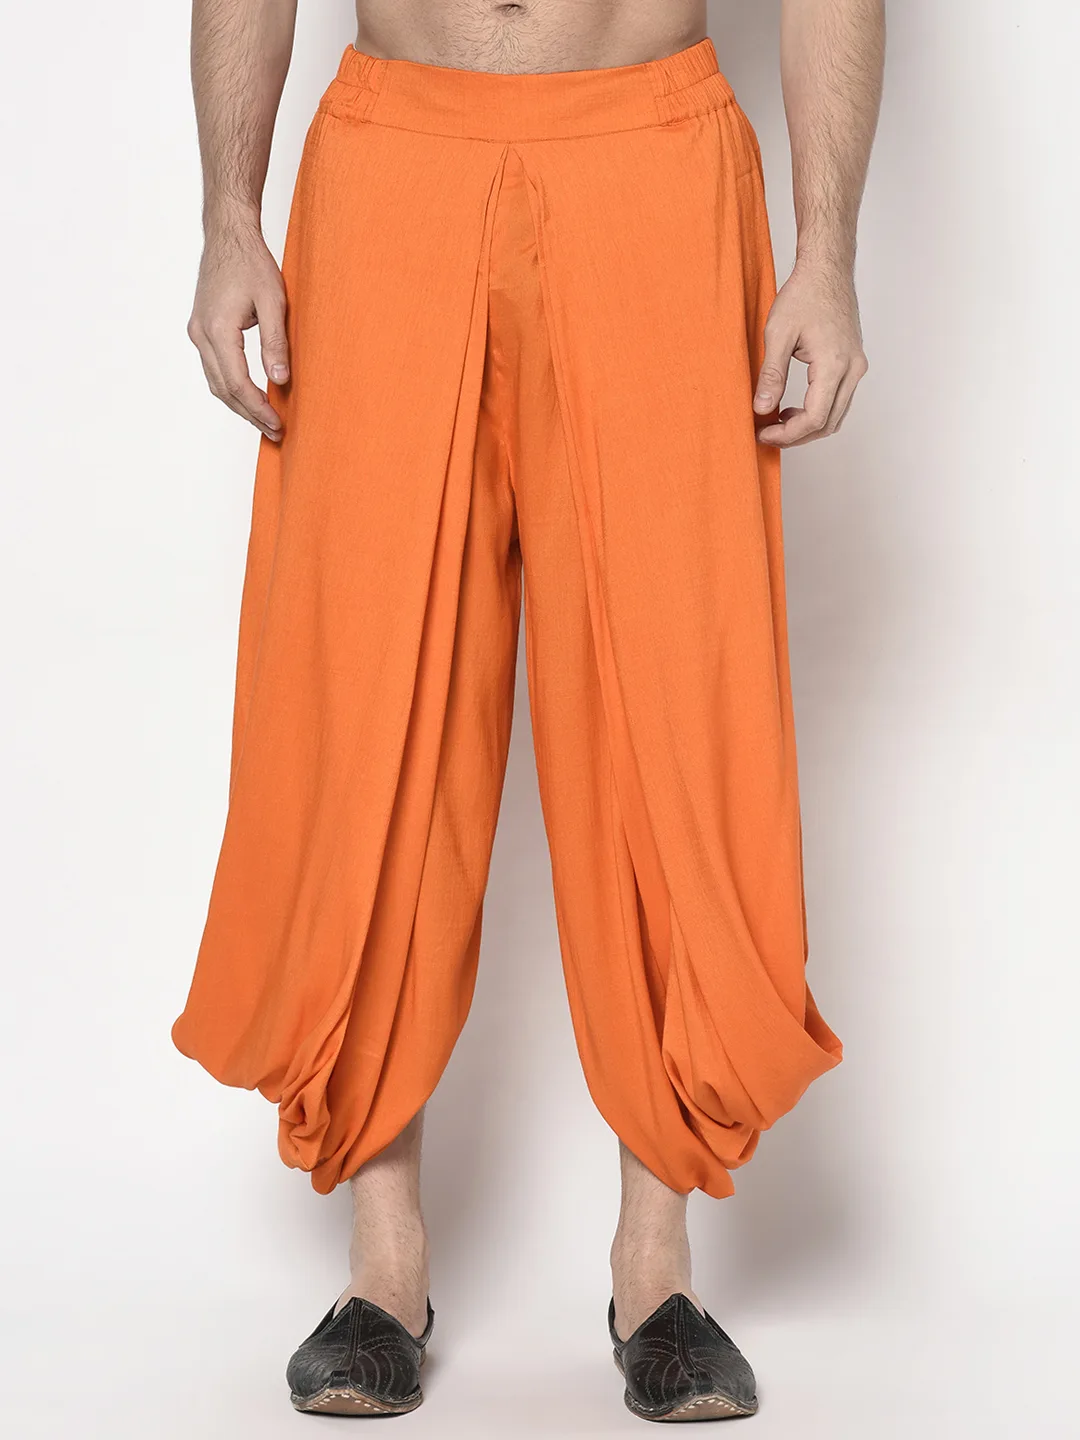 Cotton Patiala Pants - Buy Cotton Patiala Pants Online Starting at Just  ₹177 | Meesho